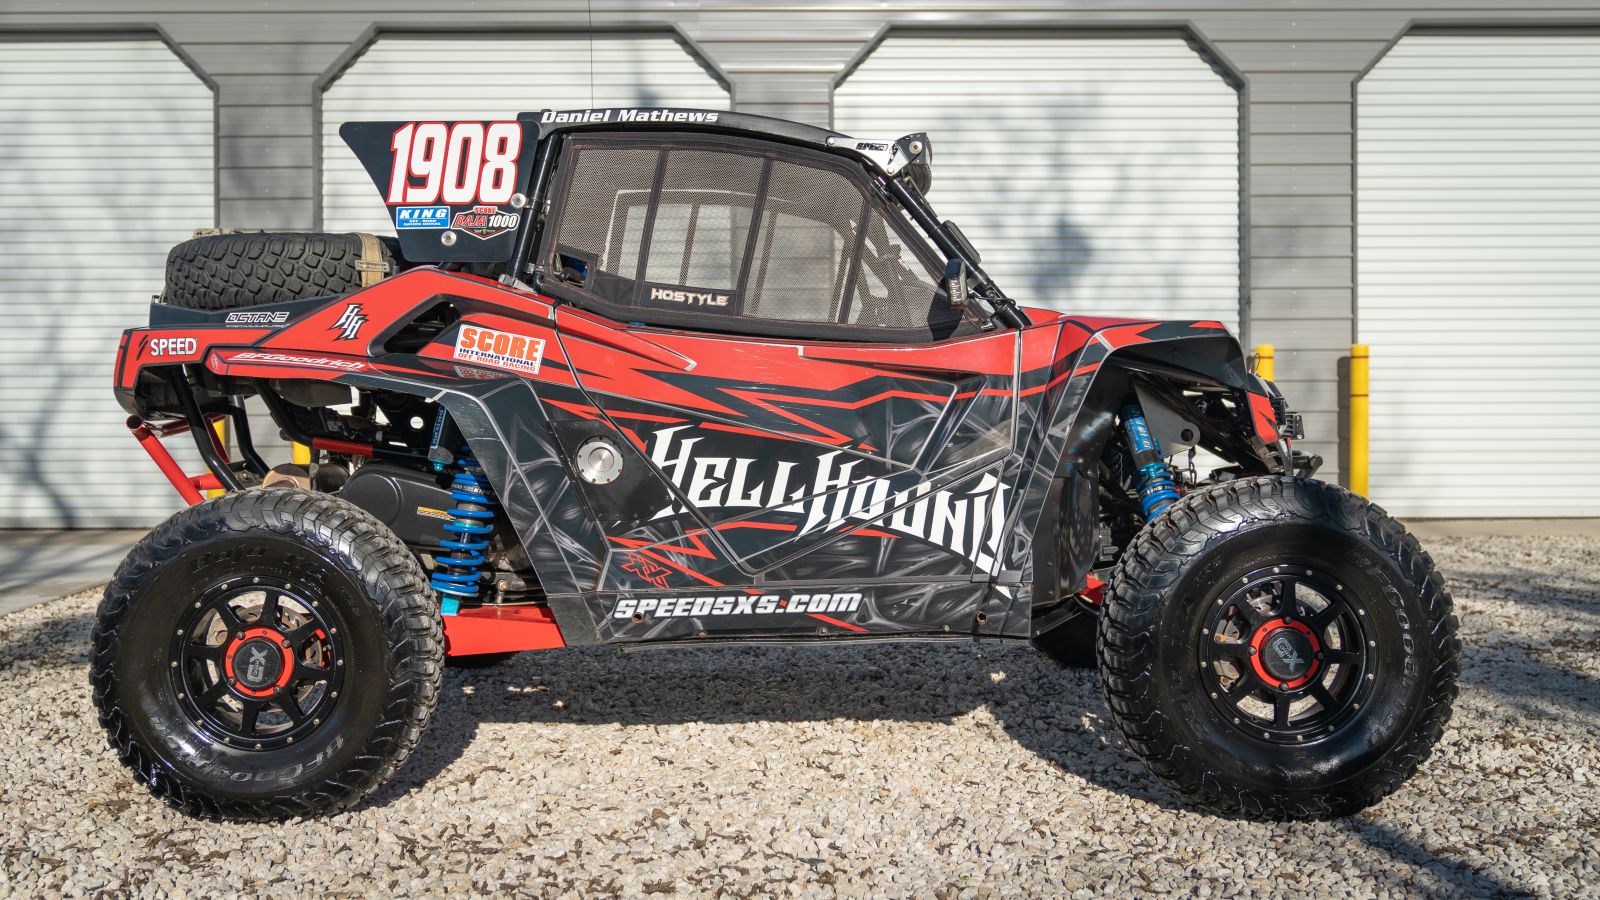 For Sale: Race Ready Arctic Cat ATV Speed SXS Textron 1000 - photo1